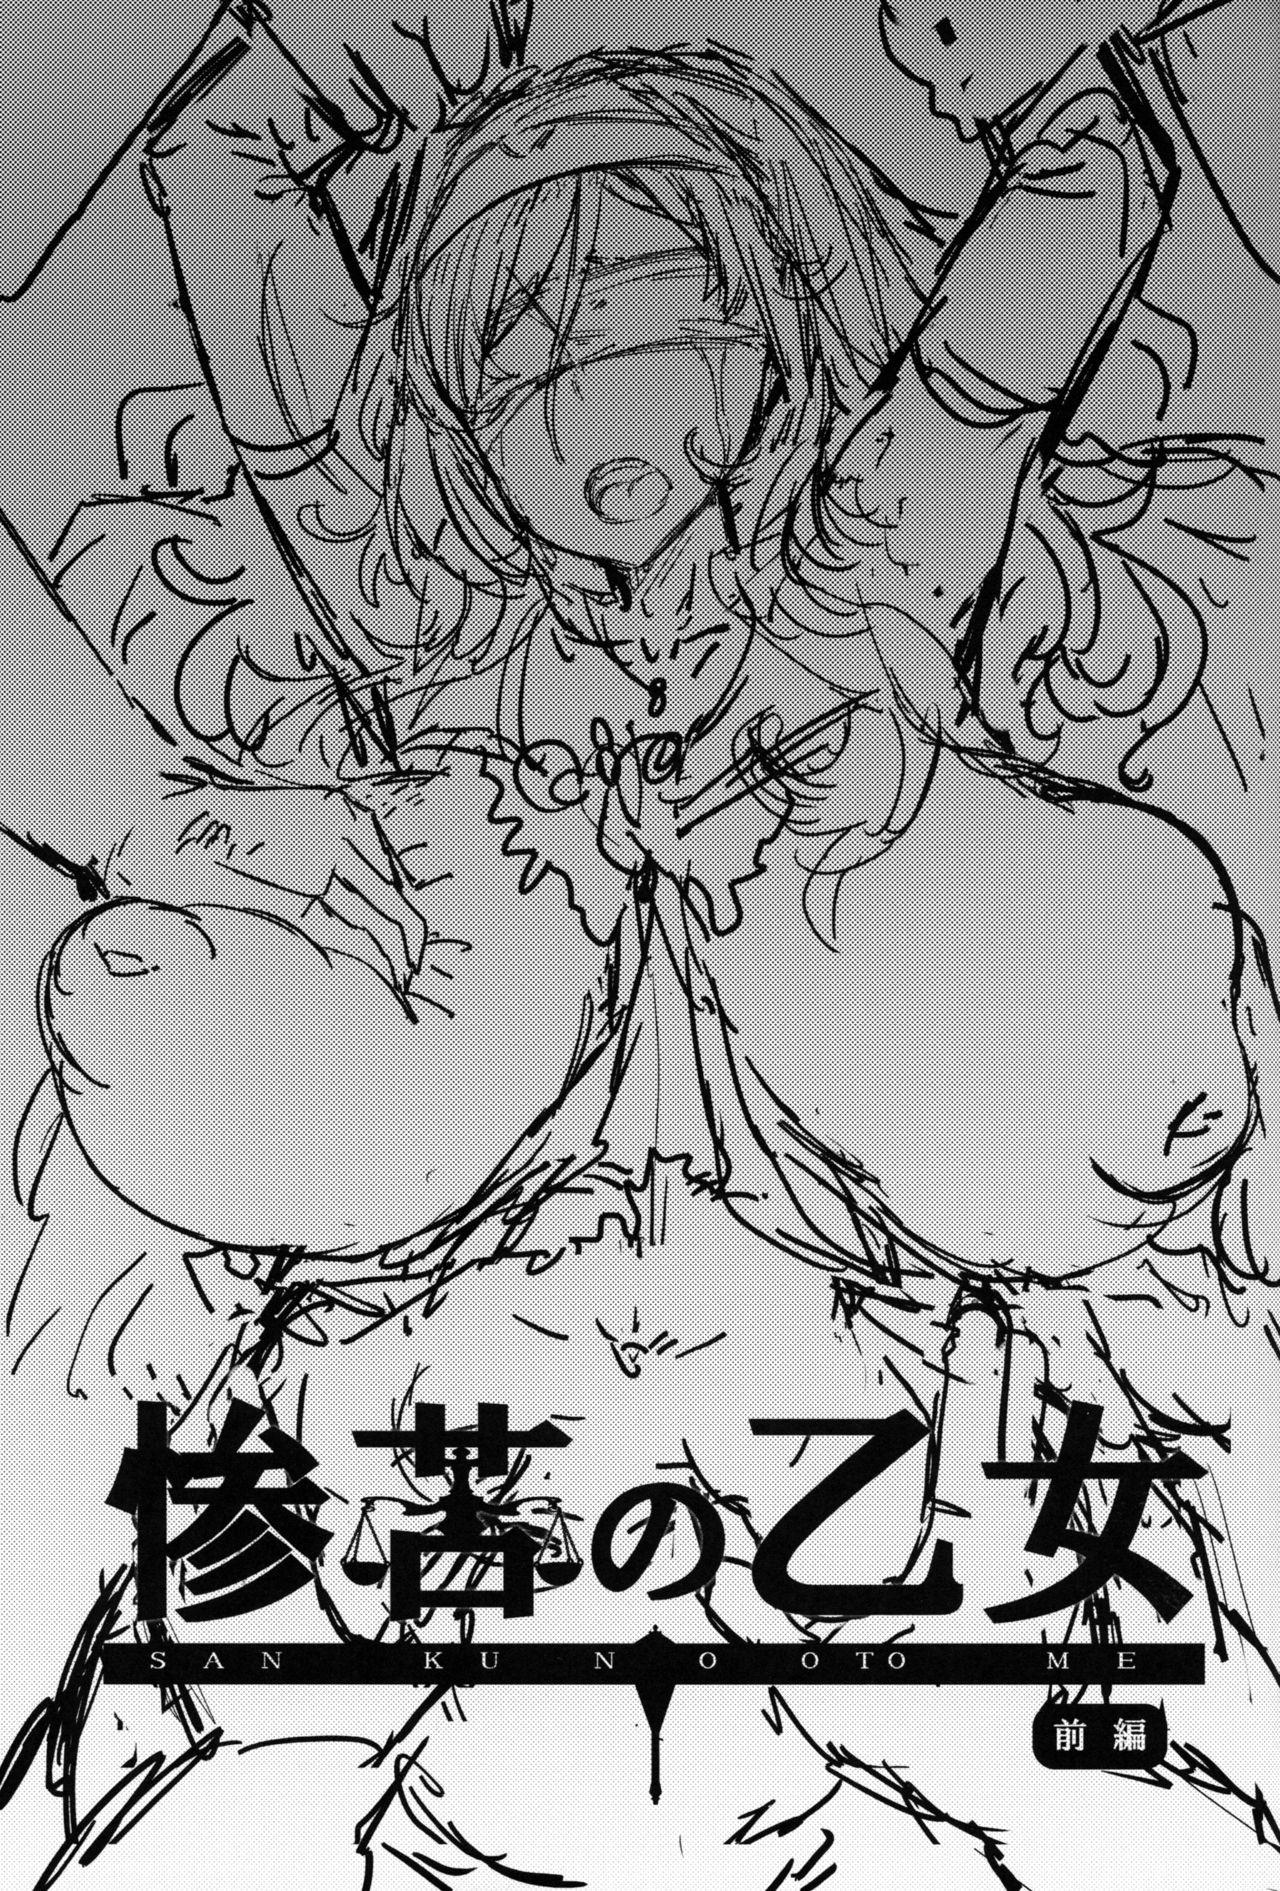 Sexo Sanku no Otome Zenpen - Goblin slayer Verified Profile - Picture 2